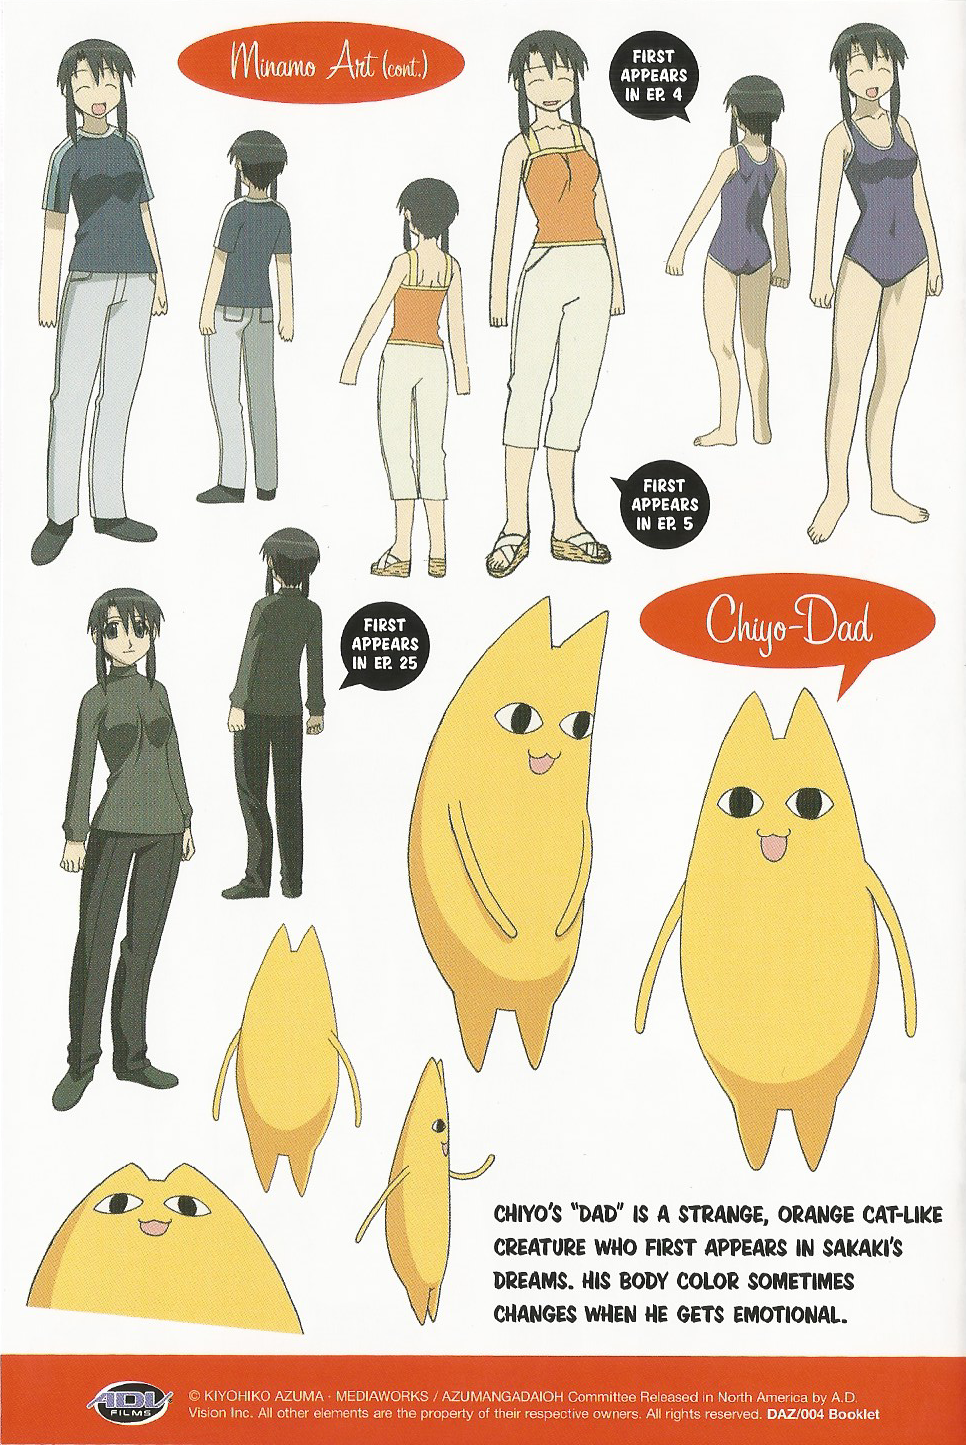 cat Cute Character Cartoon Illustration Clipart Drawing Kawaii Anime Manga  Design Art 8470251 PNG